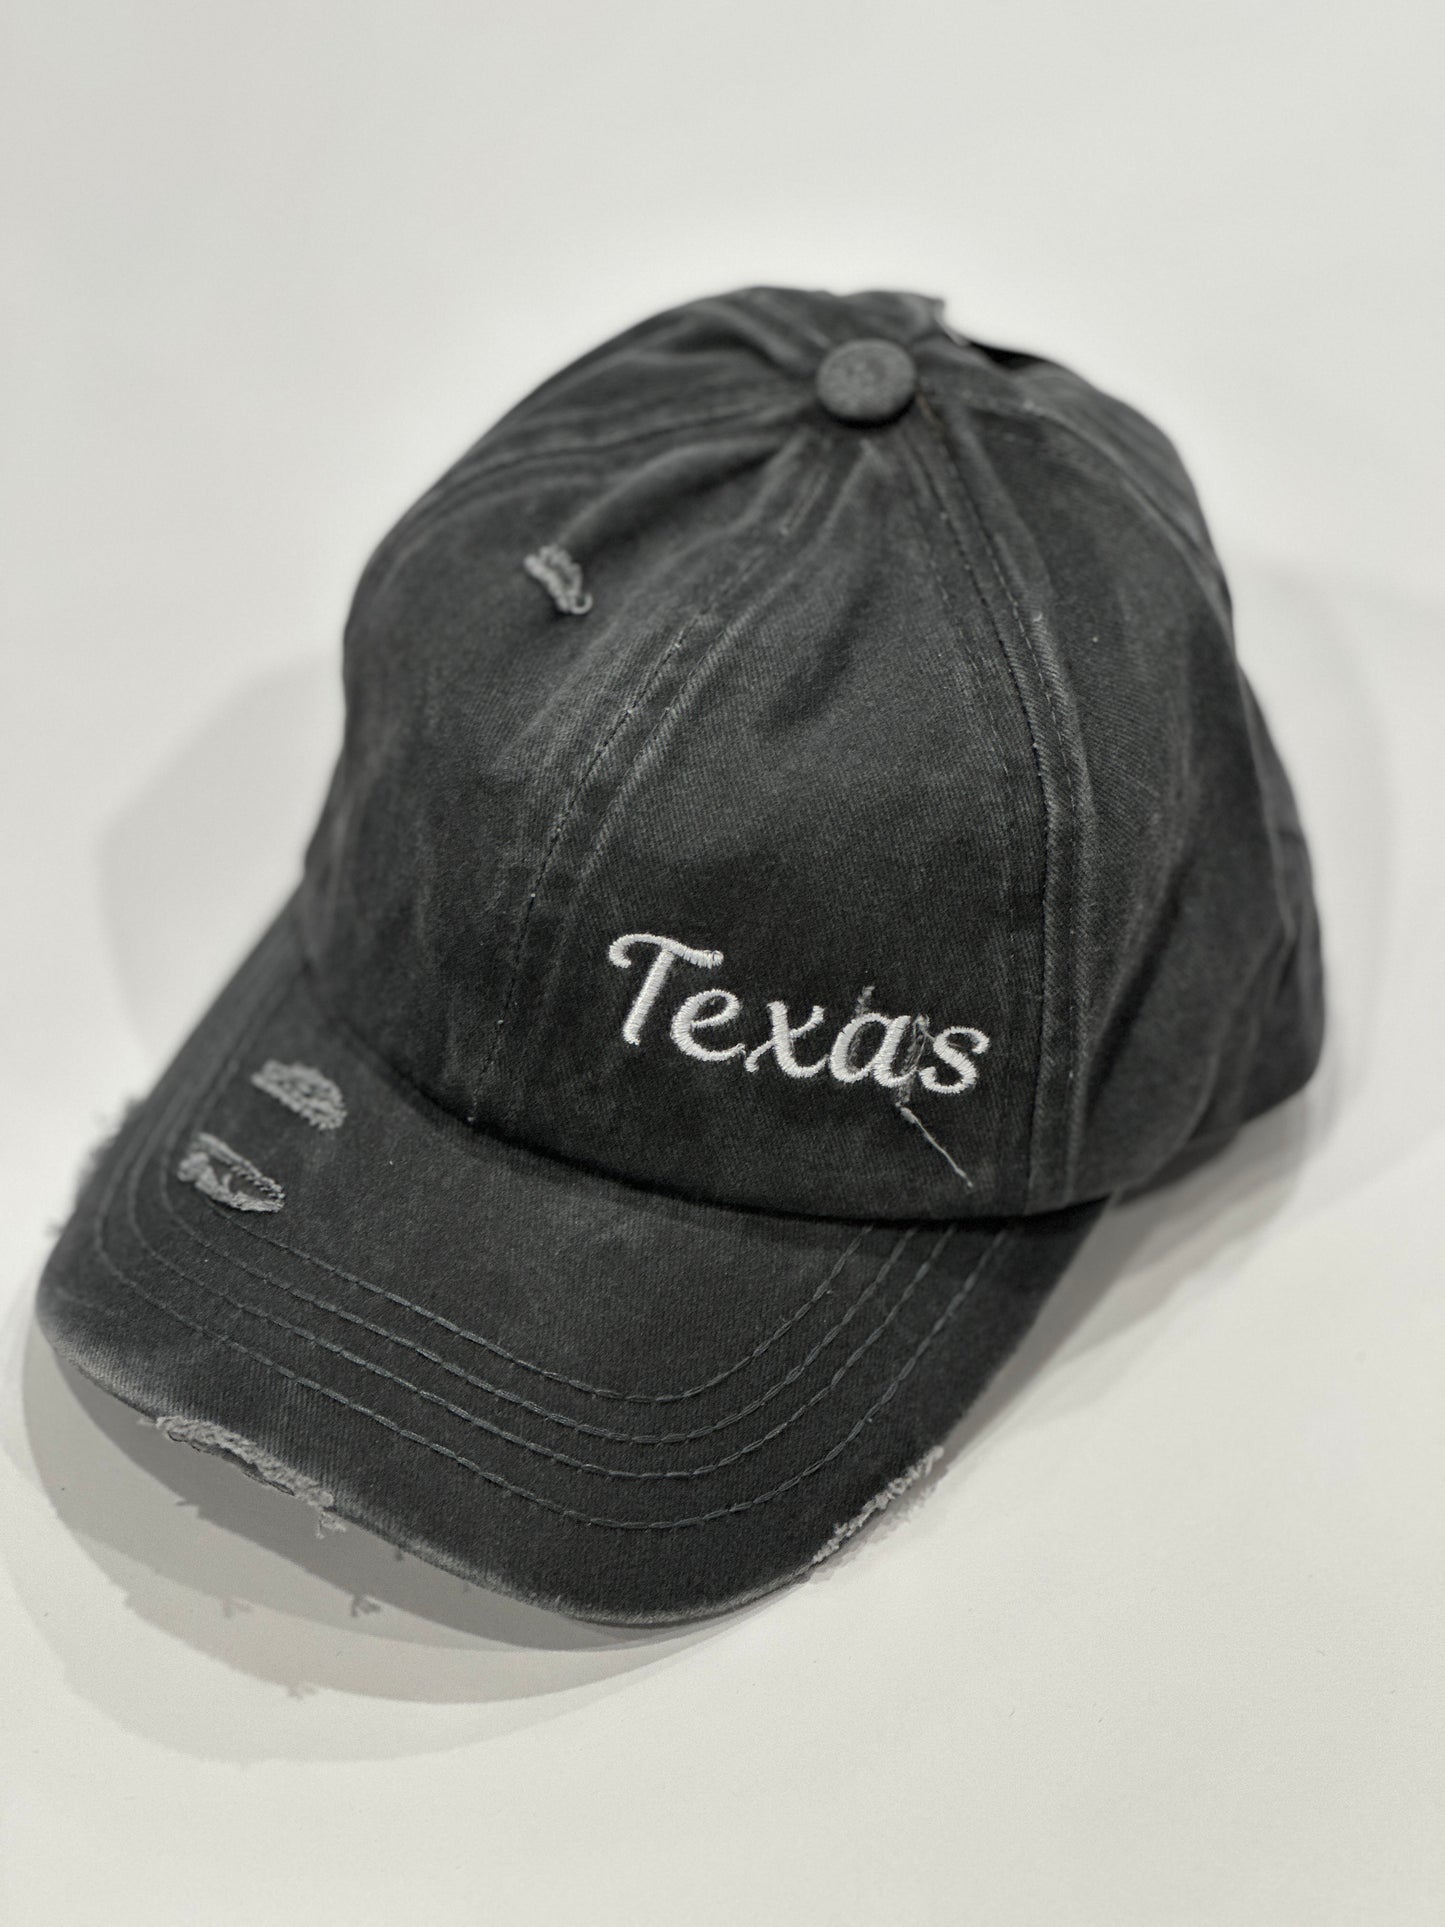 C.C Texas Criss Cross Hat